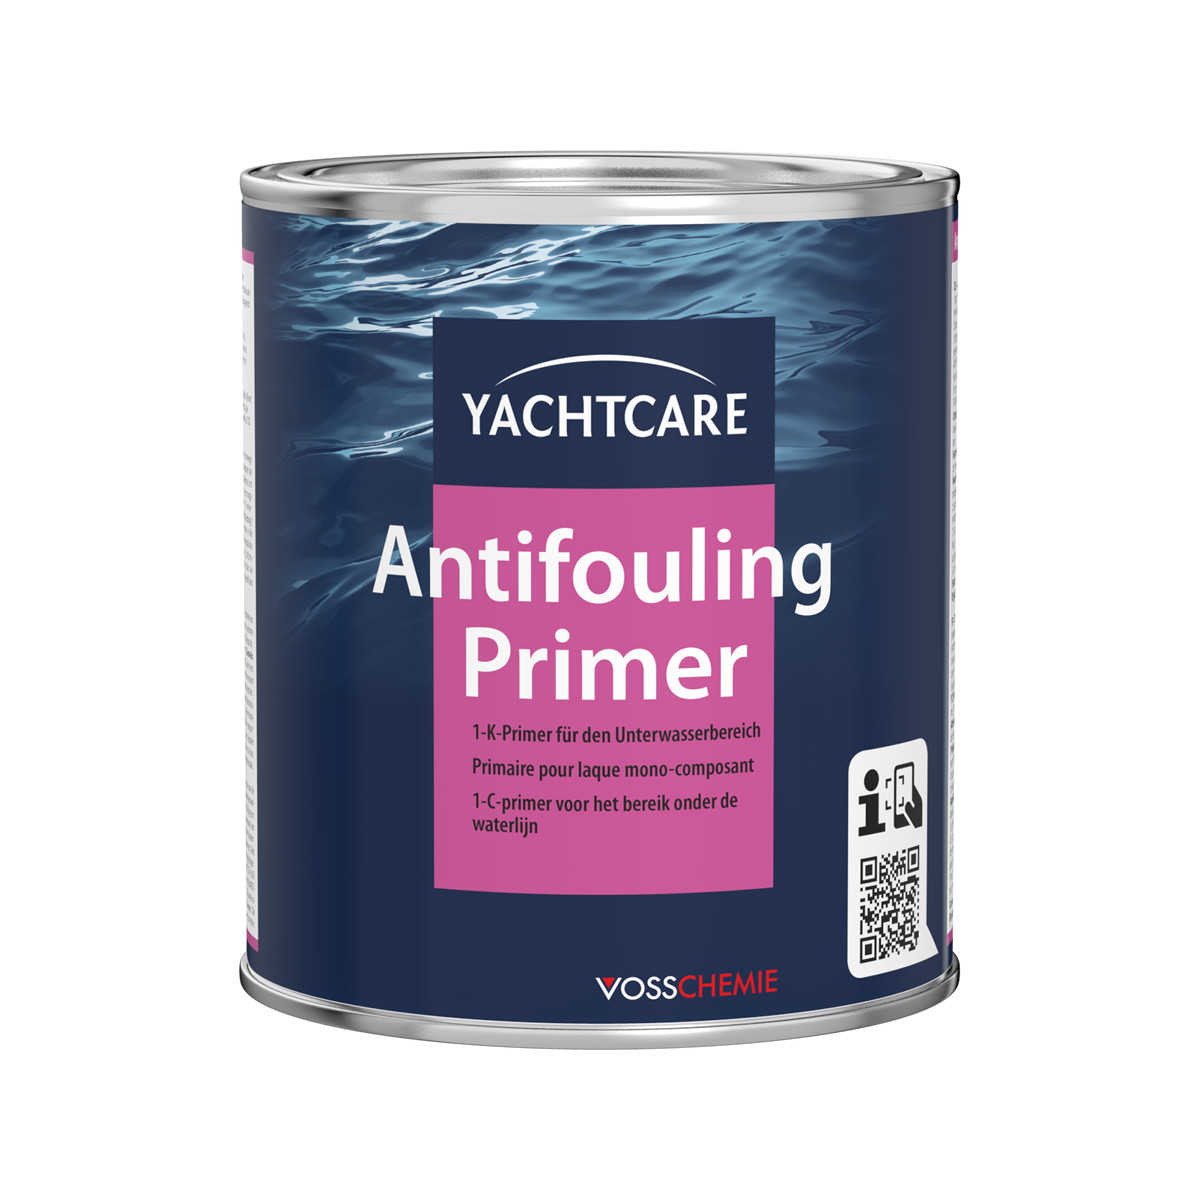 Yachtcare Antifouling Primer primaire - gris, 750ml 